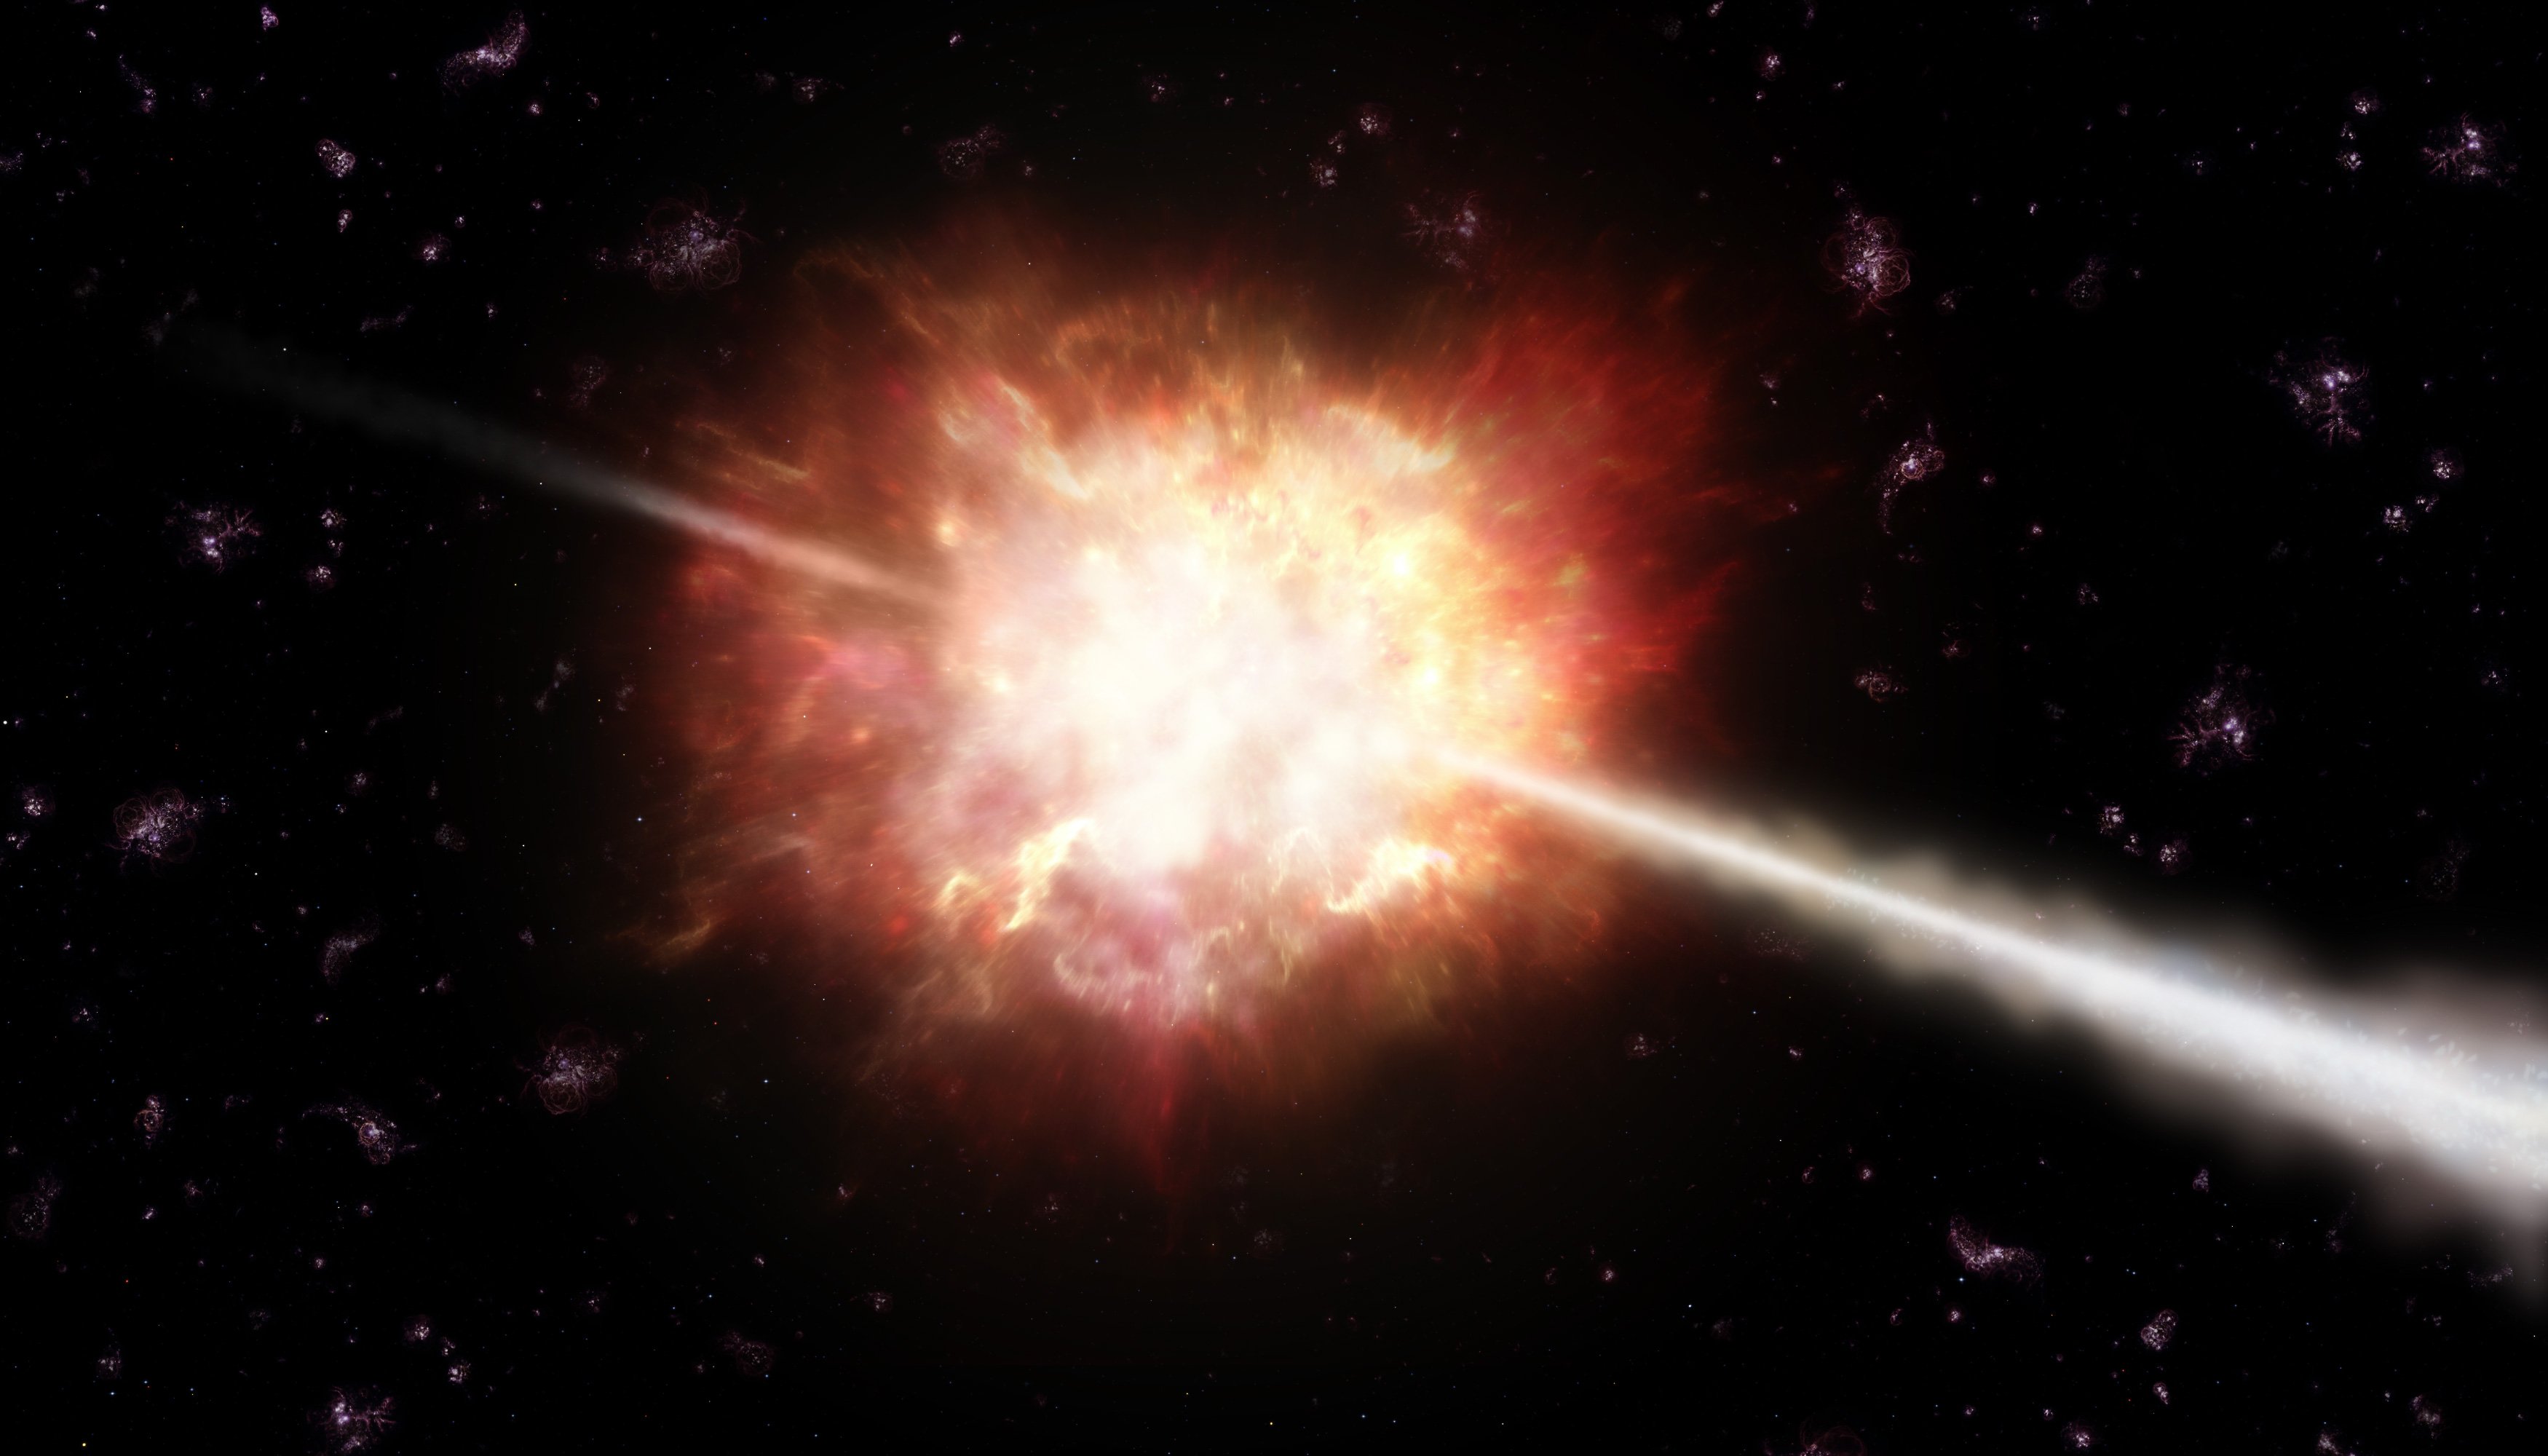 Artists impression of a gamma ray burst ESO